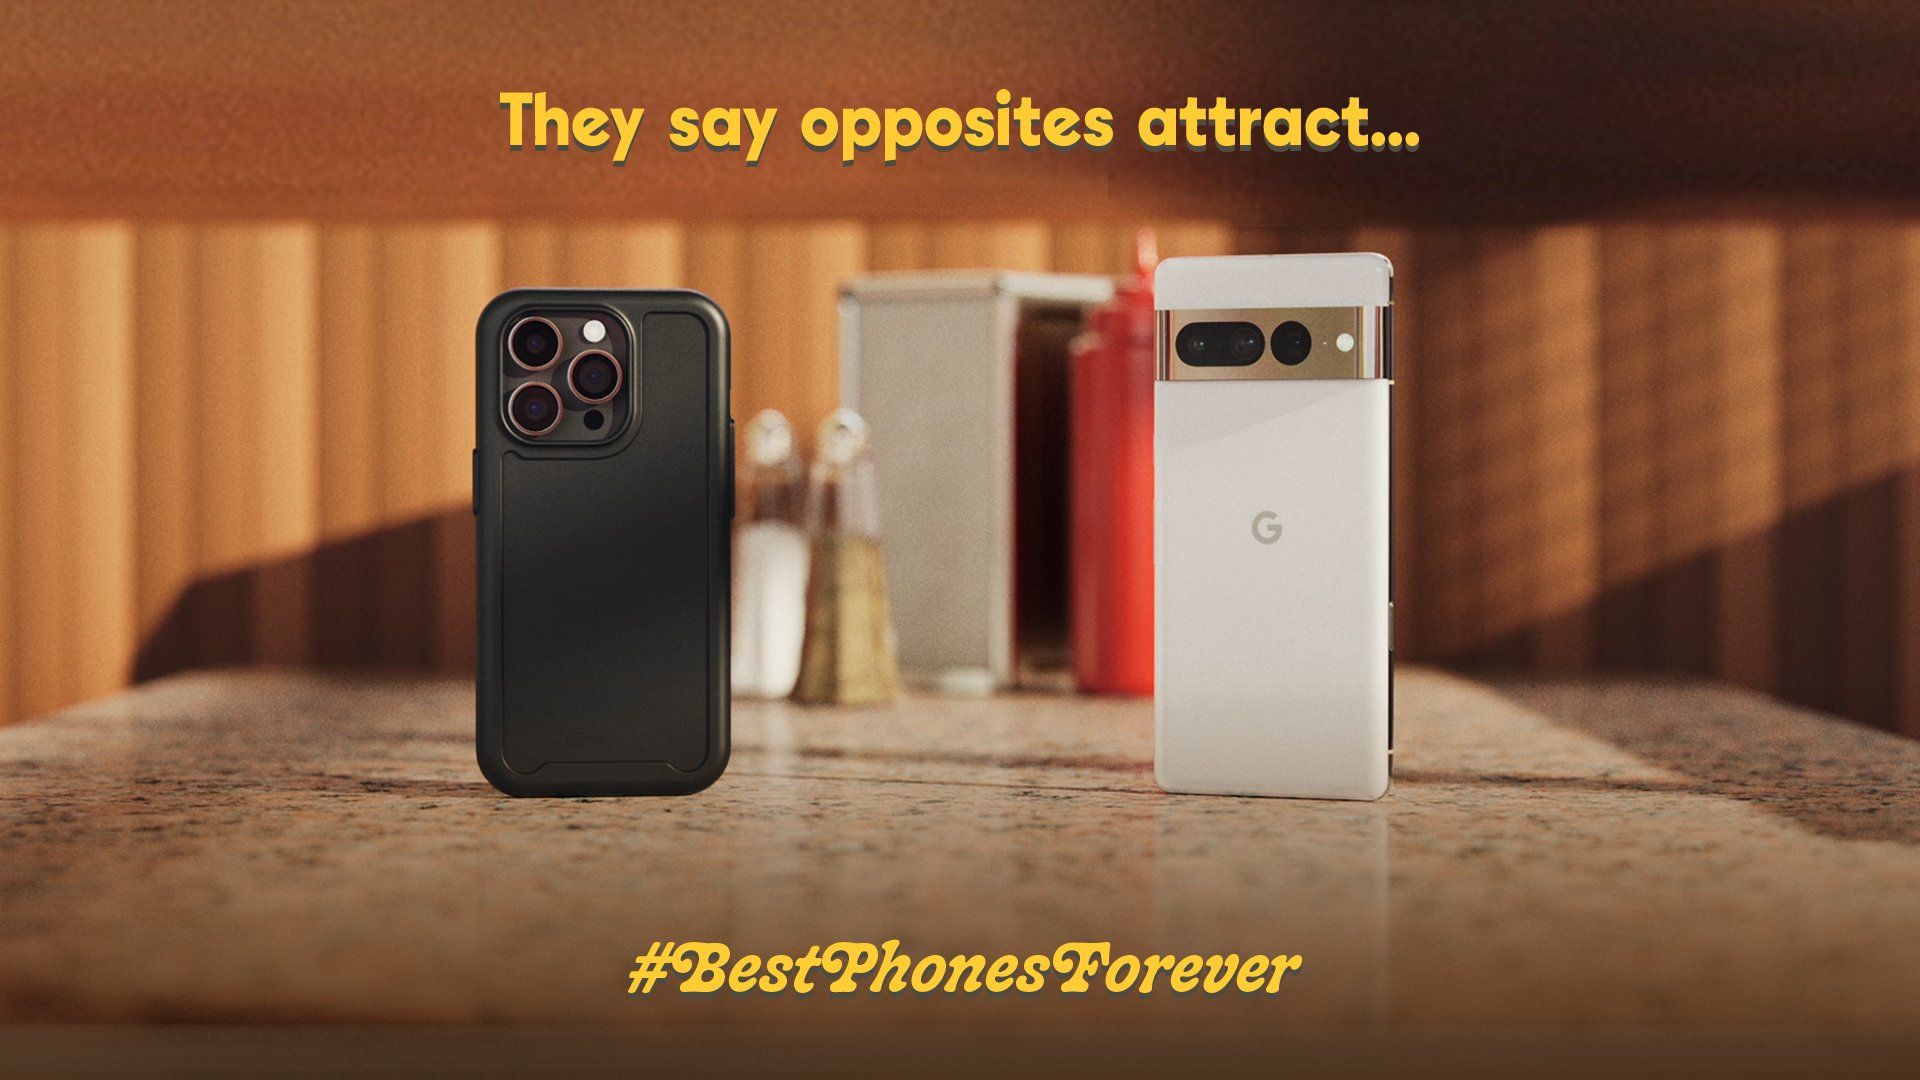 Campaign Google Pixel "Best Phones Forever"